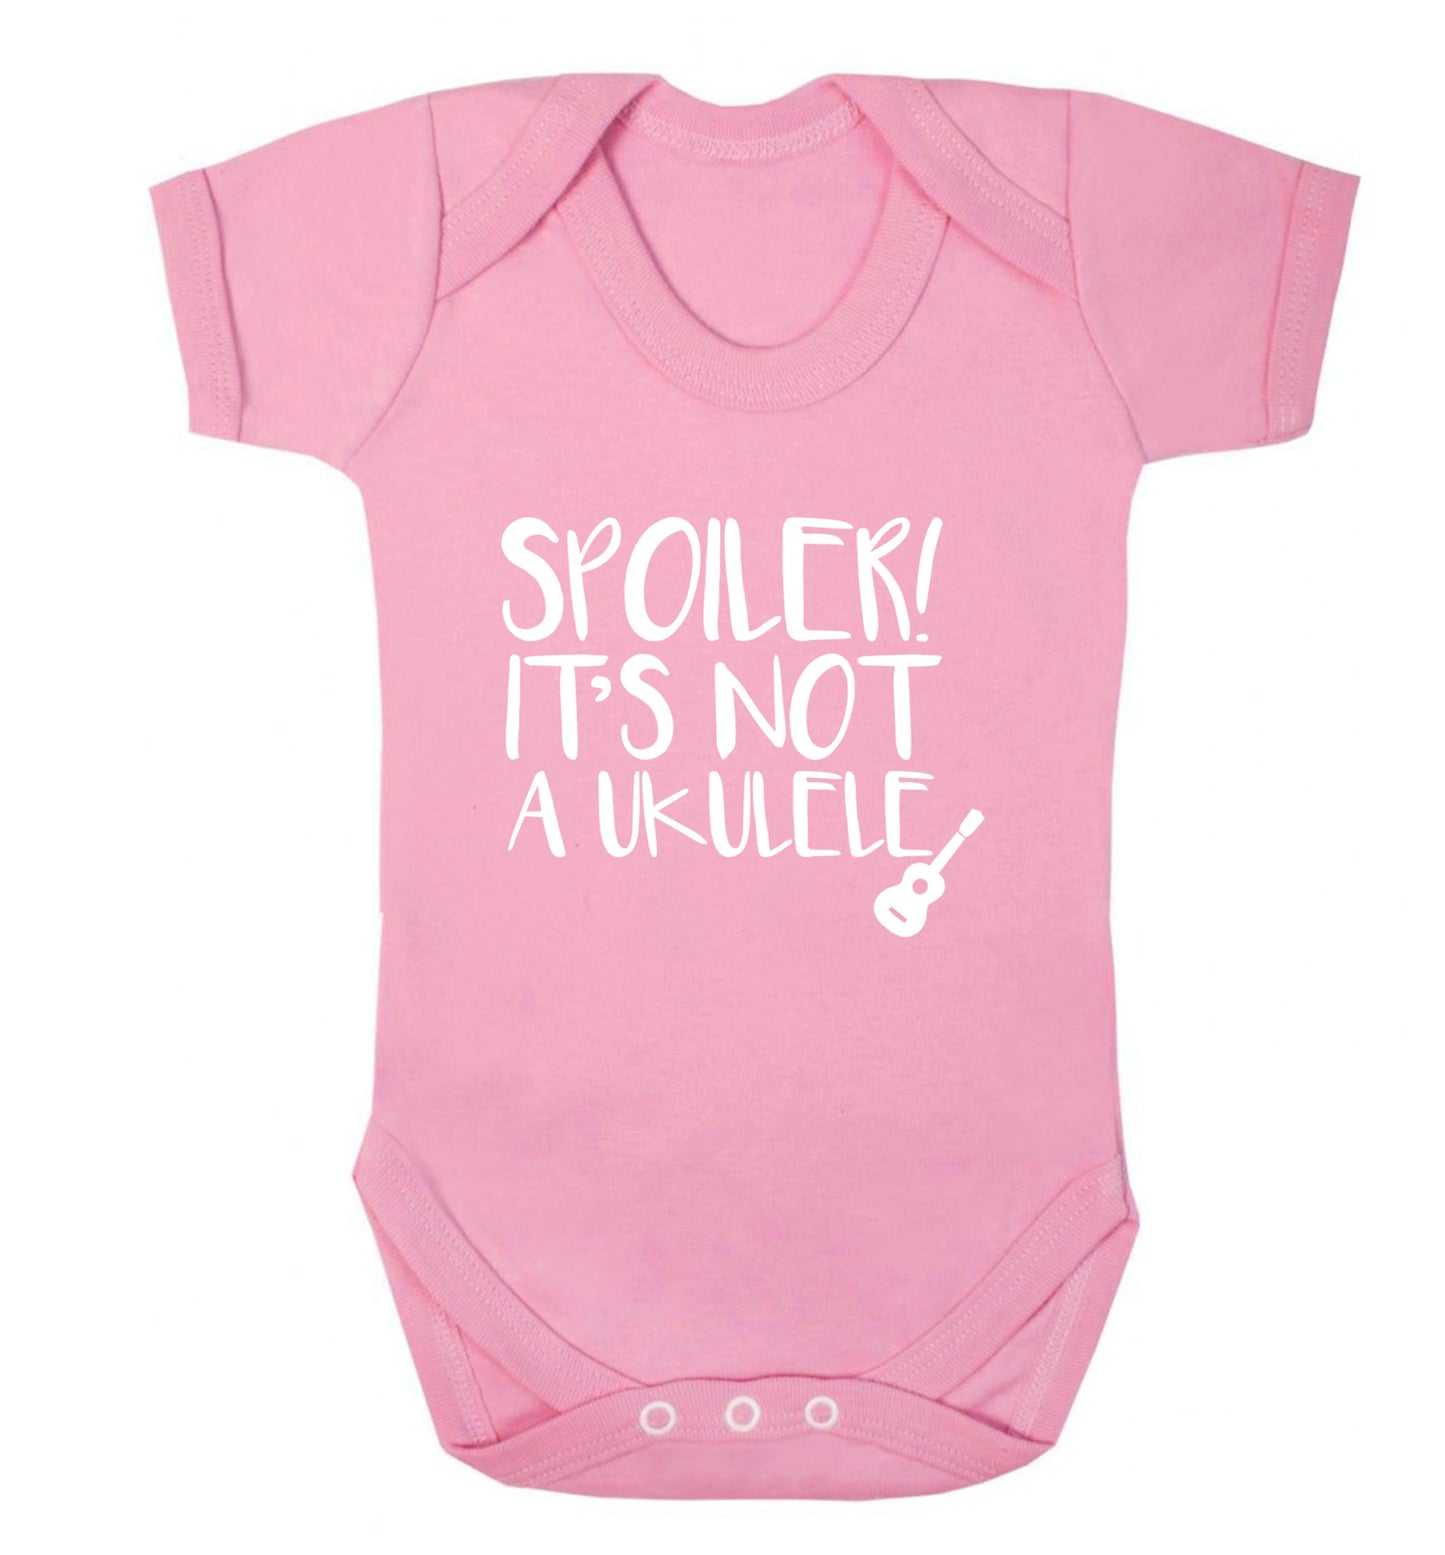 Spoiler it's not a ukulele Baby Vest pale pink 18-24 months